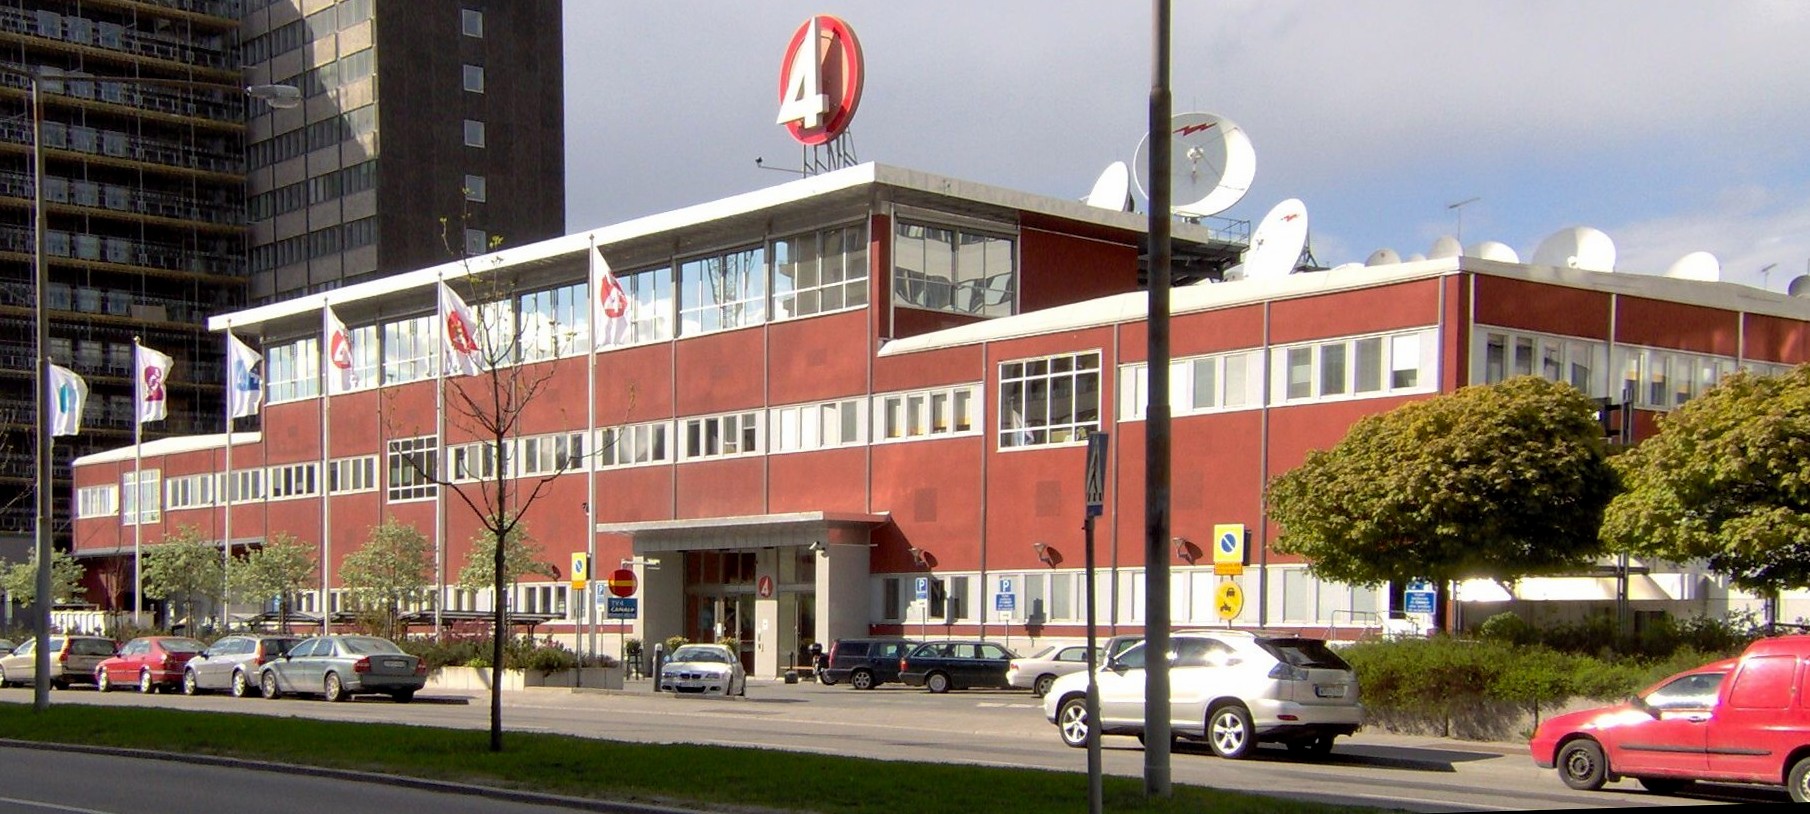 TV4-huset